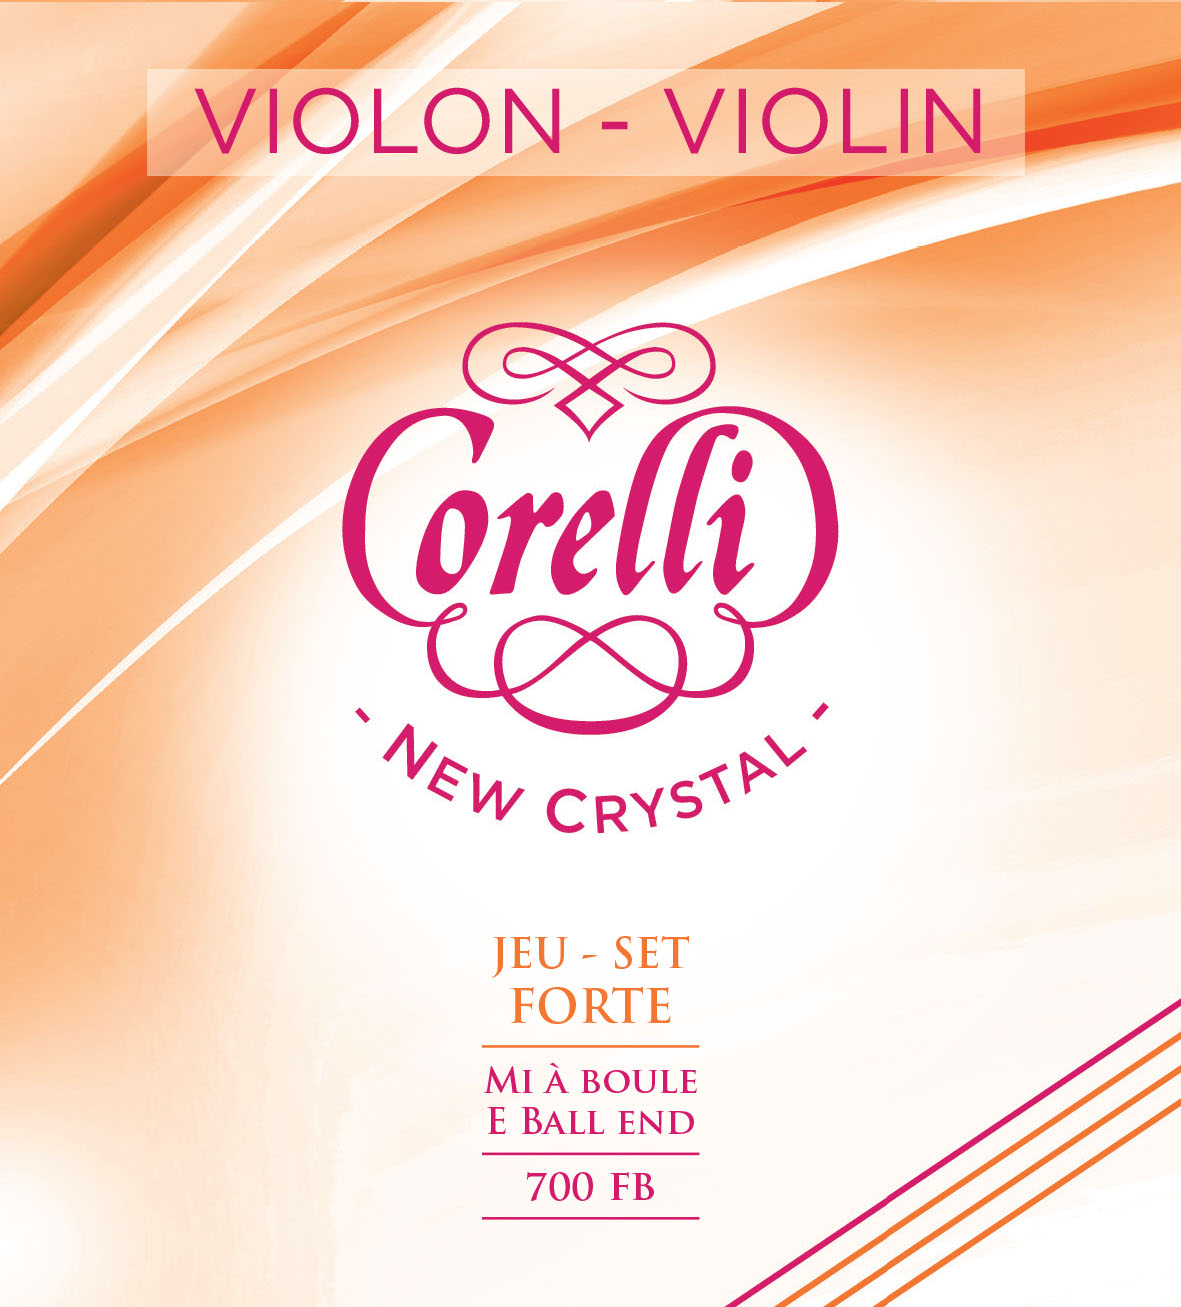 CORELLI NEW CRYSTAL FORTE 700FB Violon